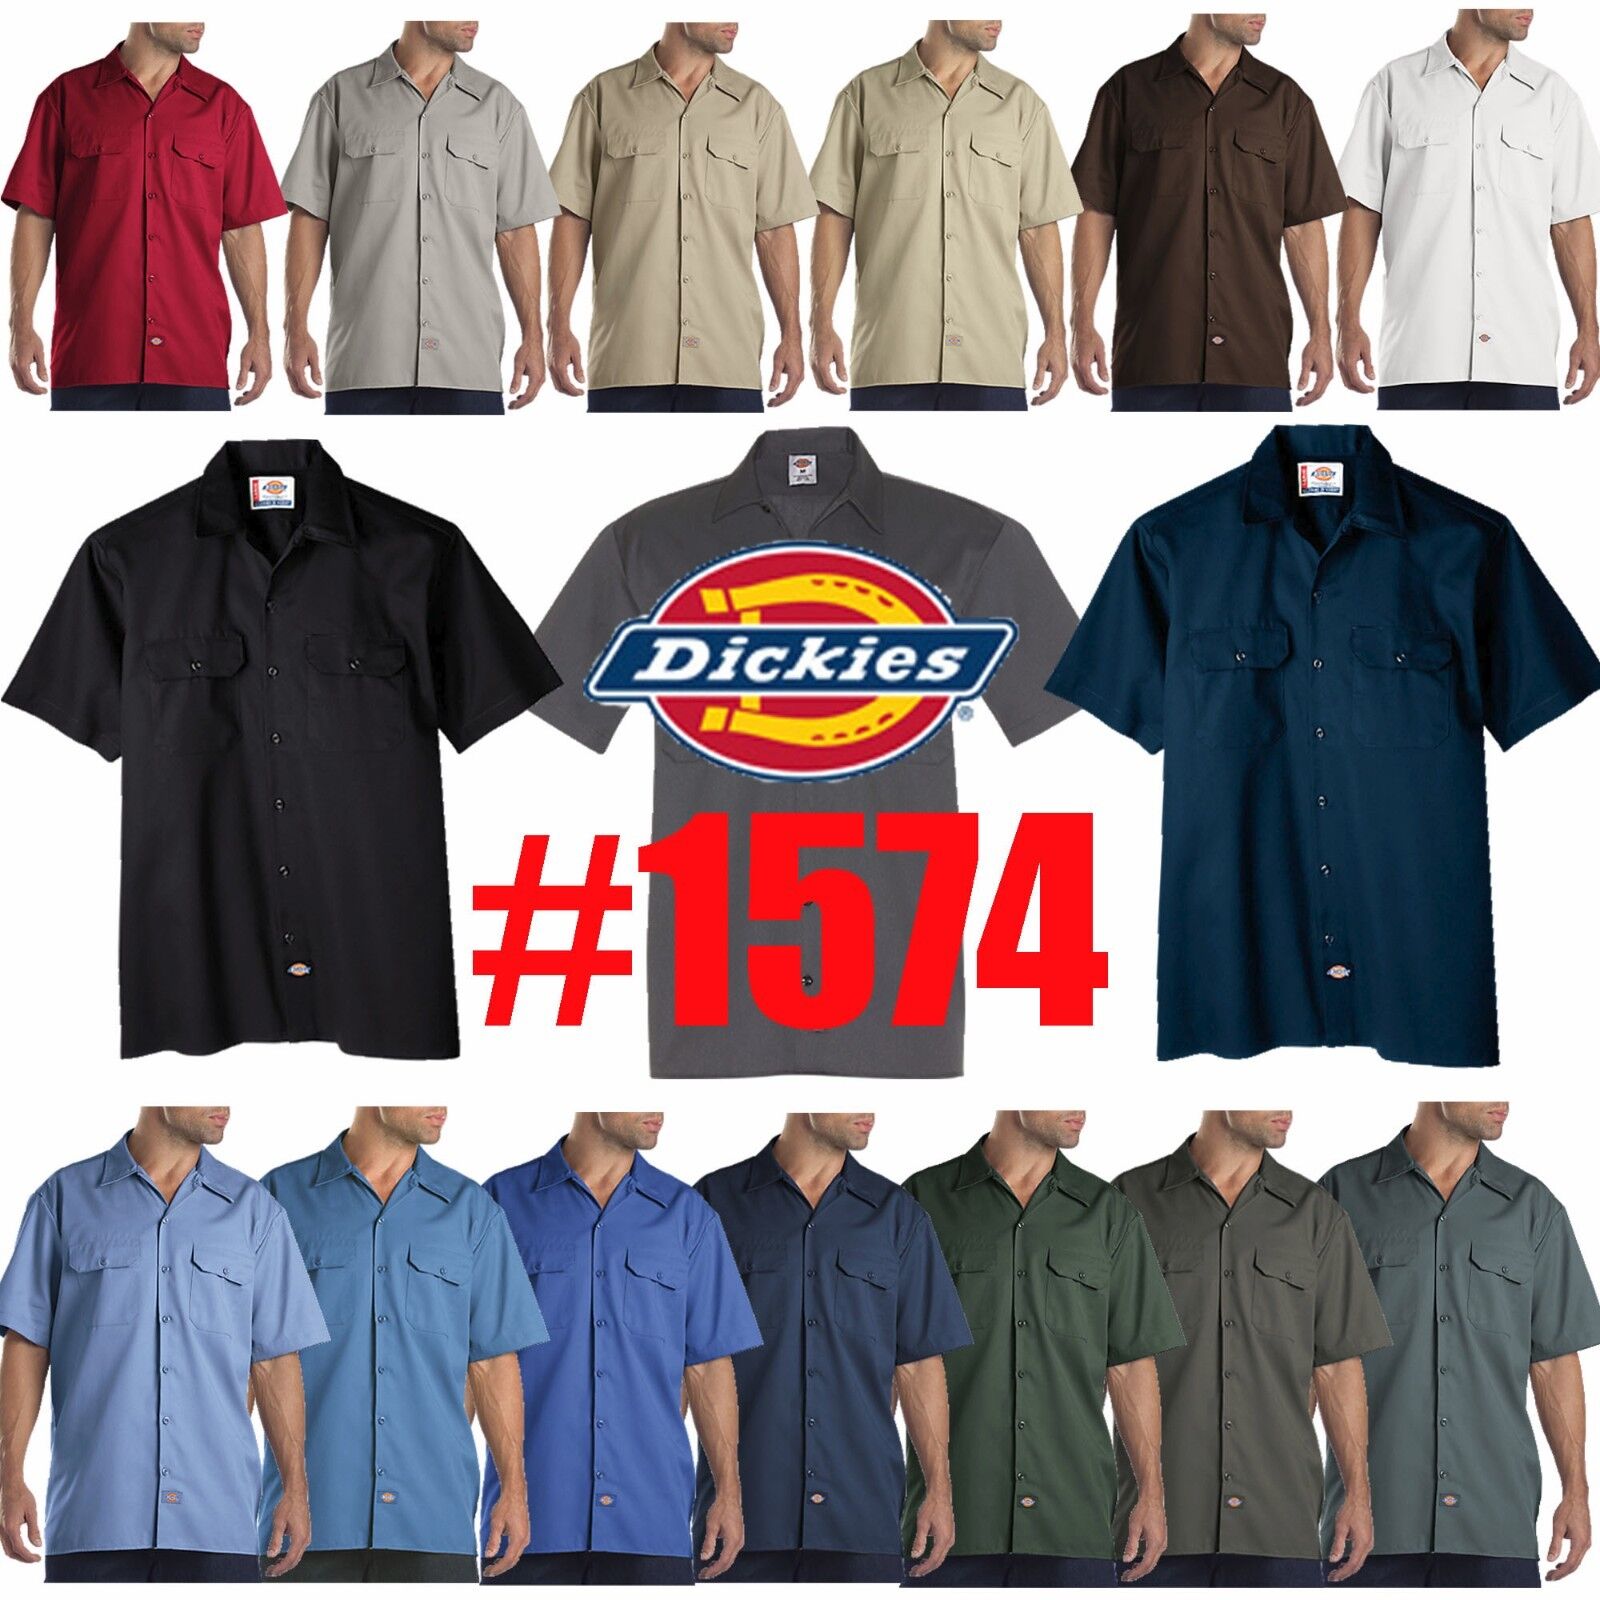 Dickies Mens Short Sleeve Work Uniform Button Up Casual Shirt 1574 Sizes S-6XL Dickies